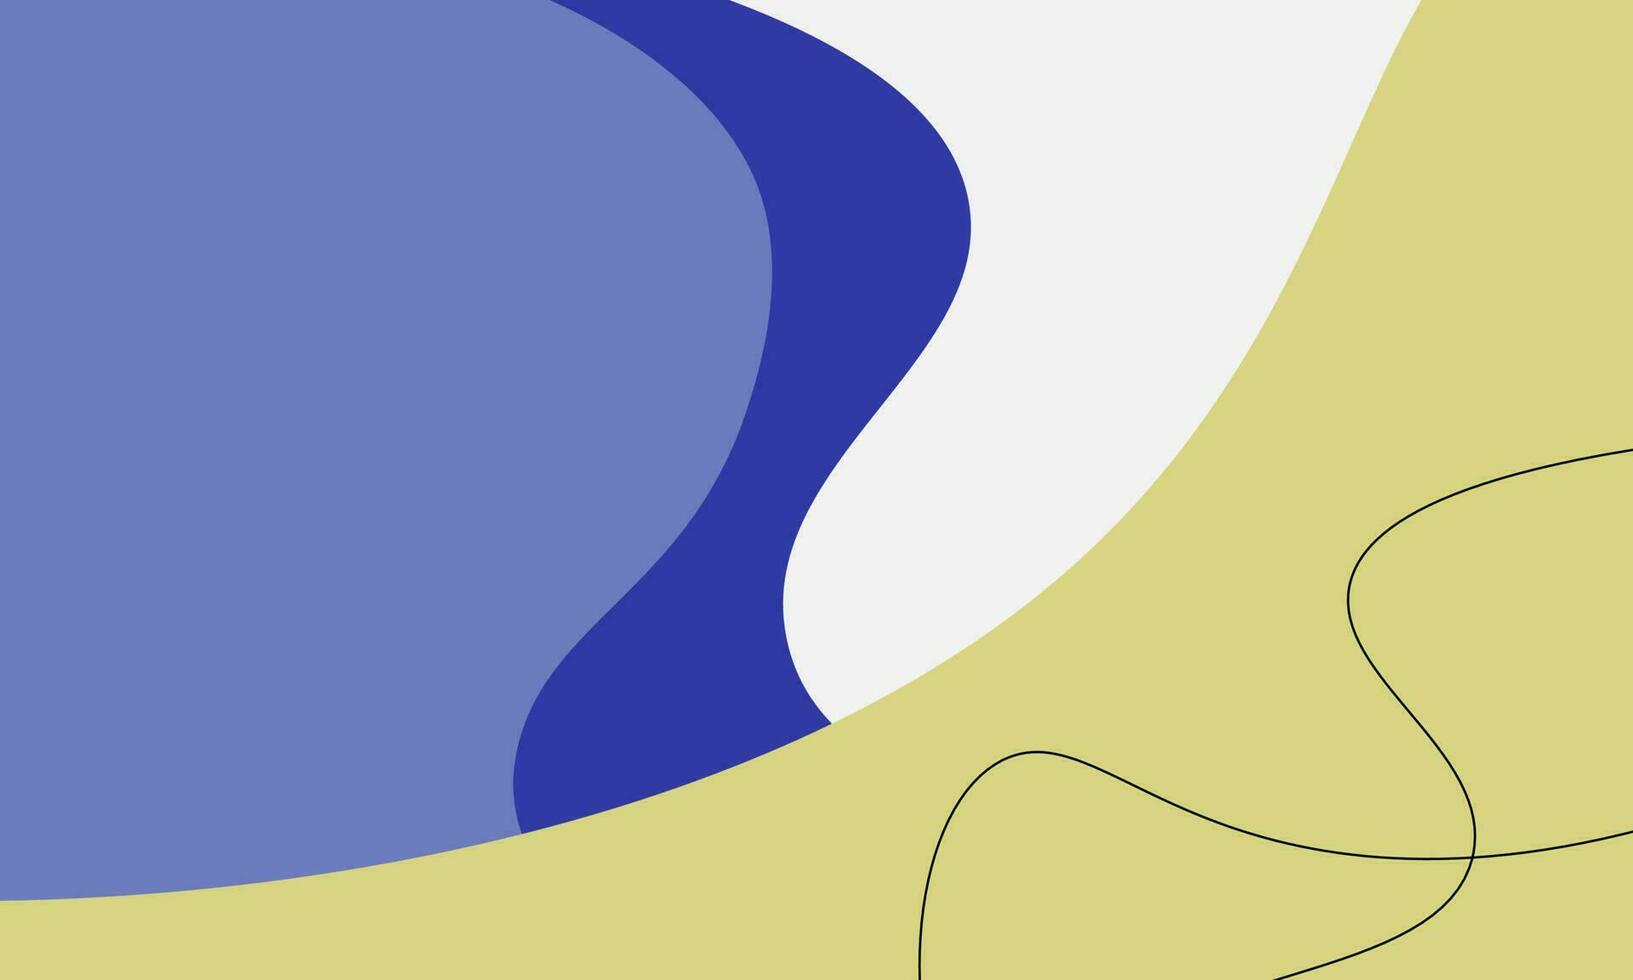 vetor abstrato azul e amarelo. design de modelo para cartão, mídia social, banner